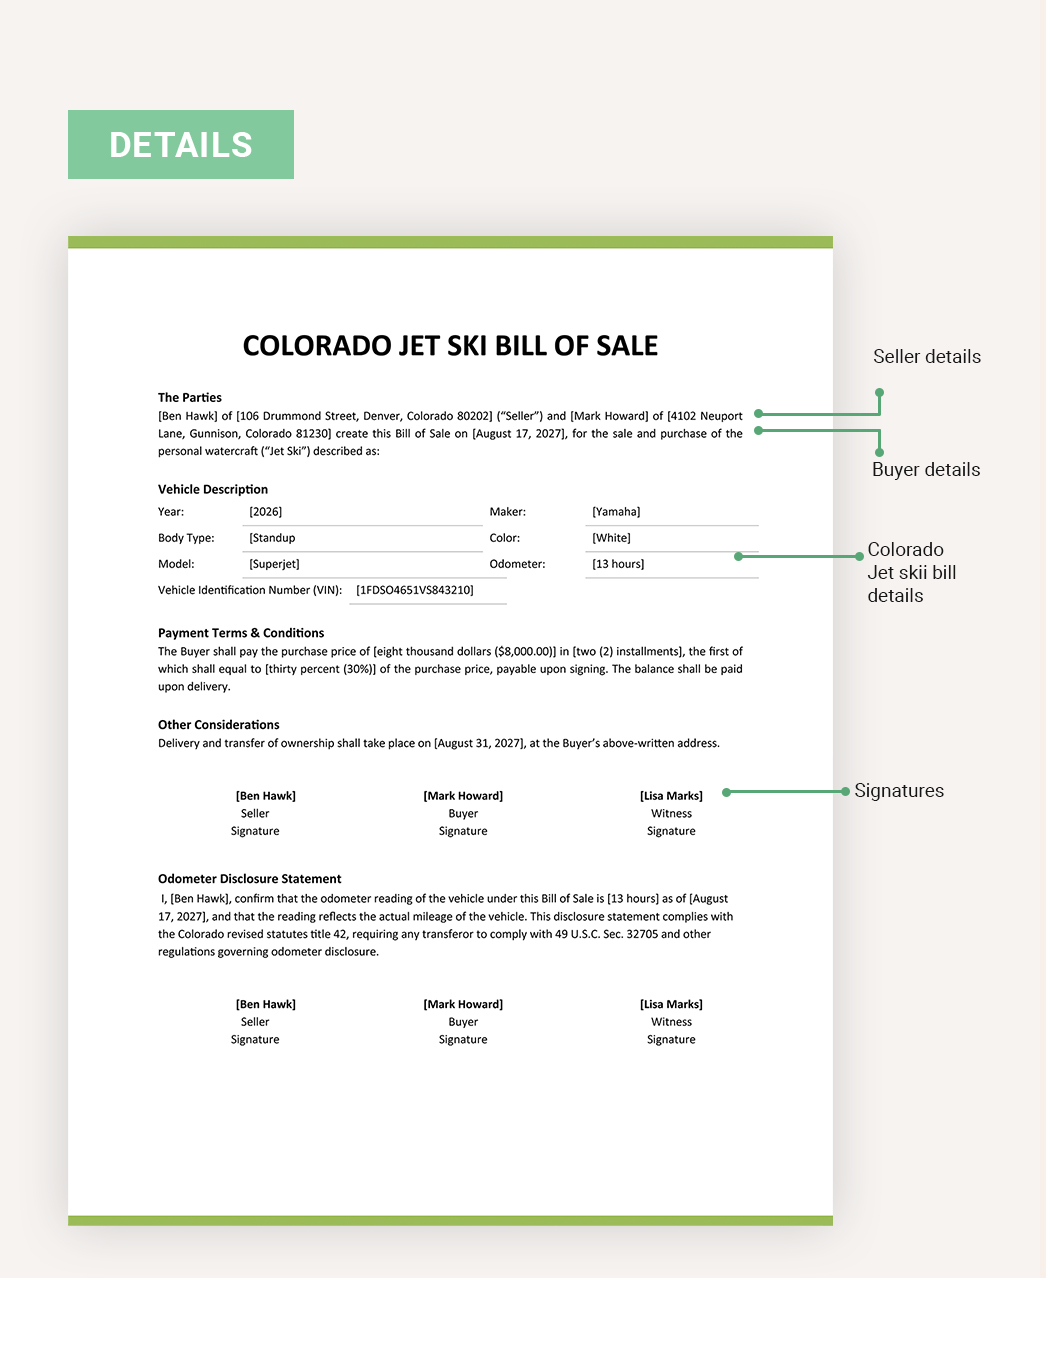 Colorado Jet Ski Bill Of Sale Template